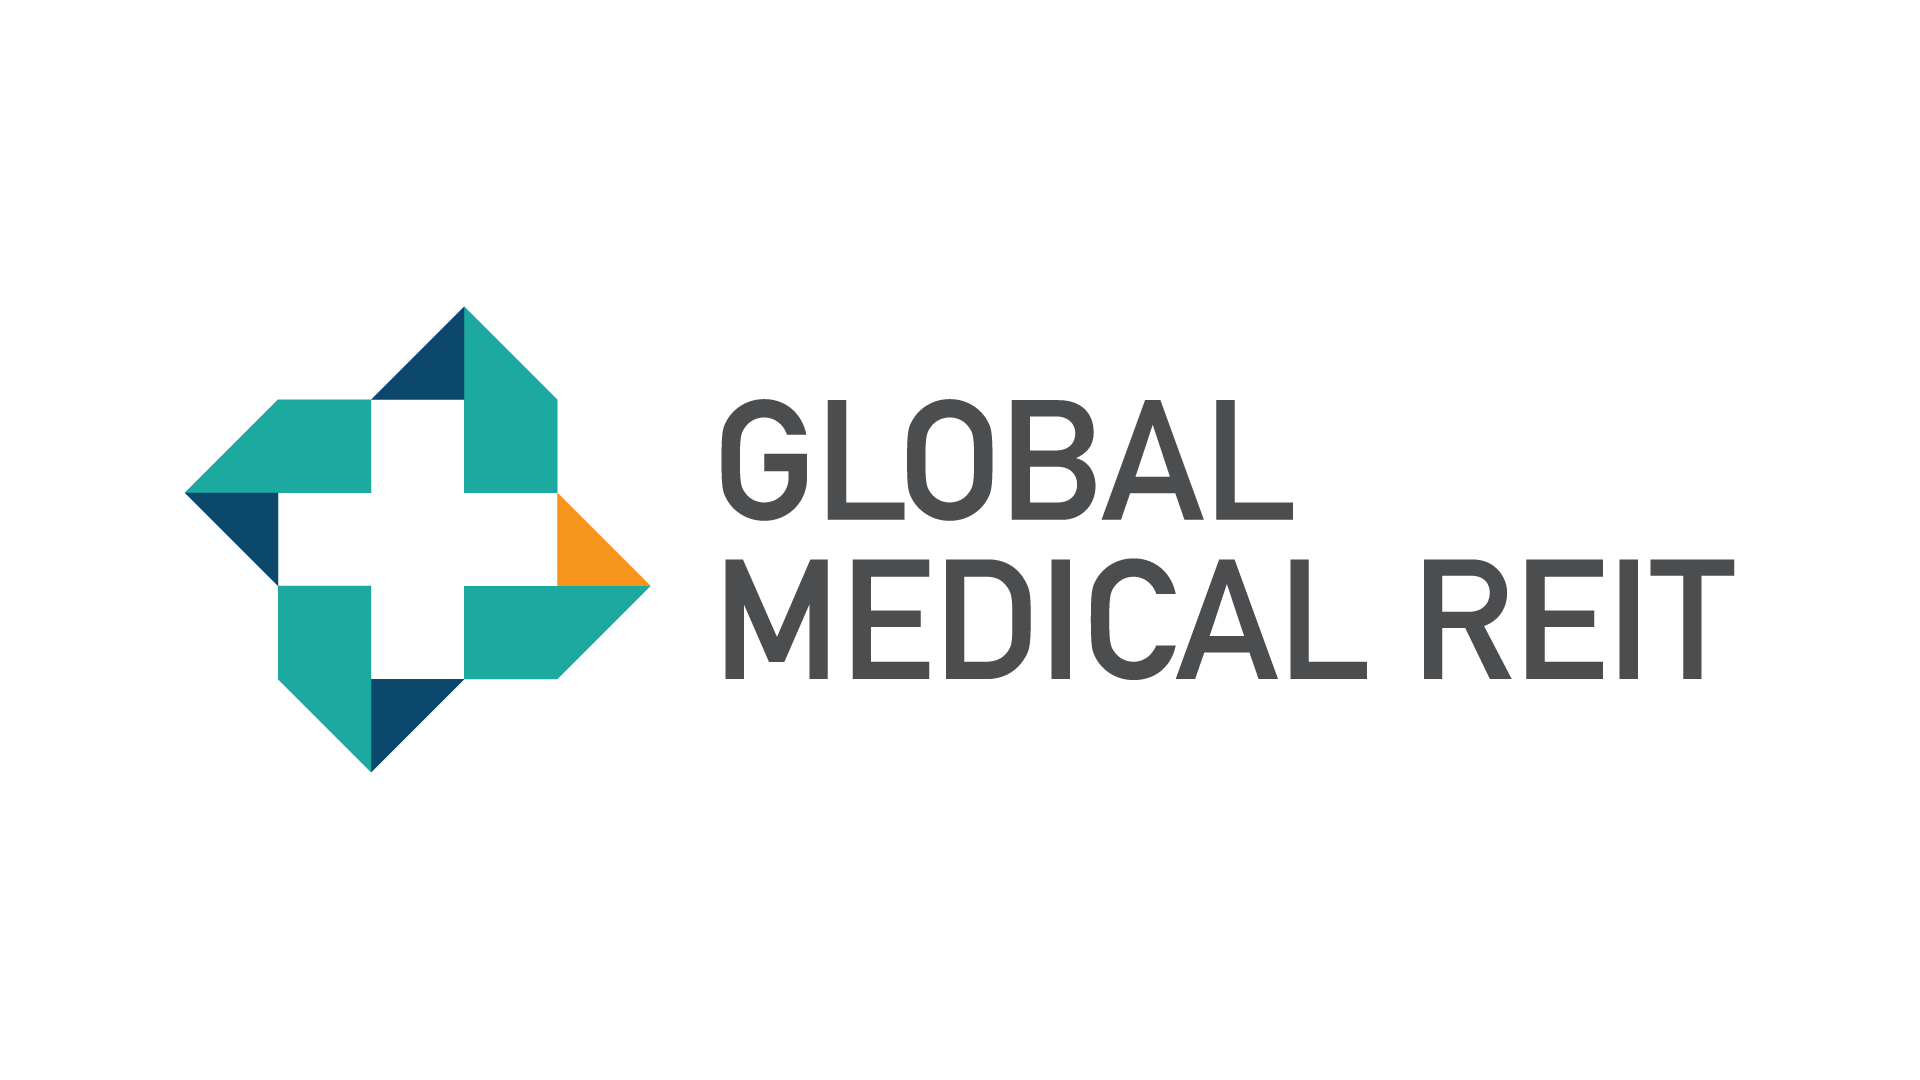 Global Medical REIT Inc